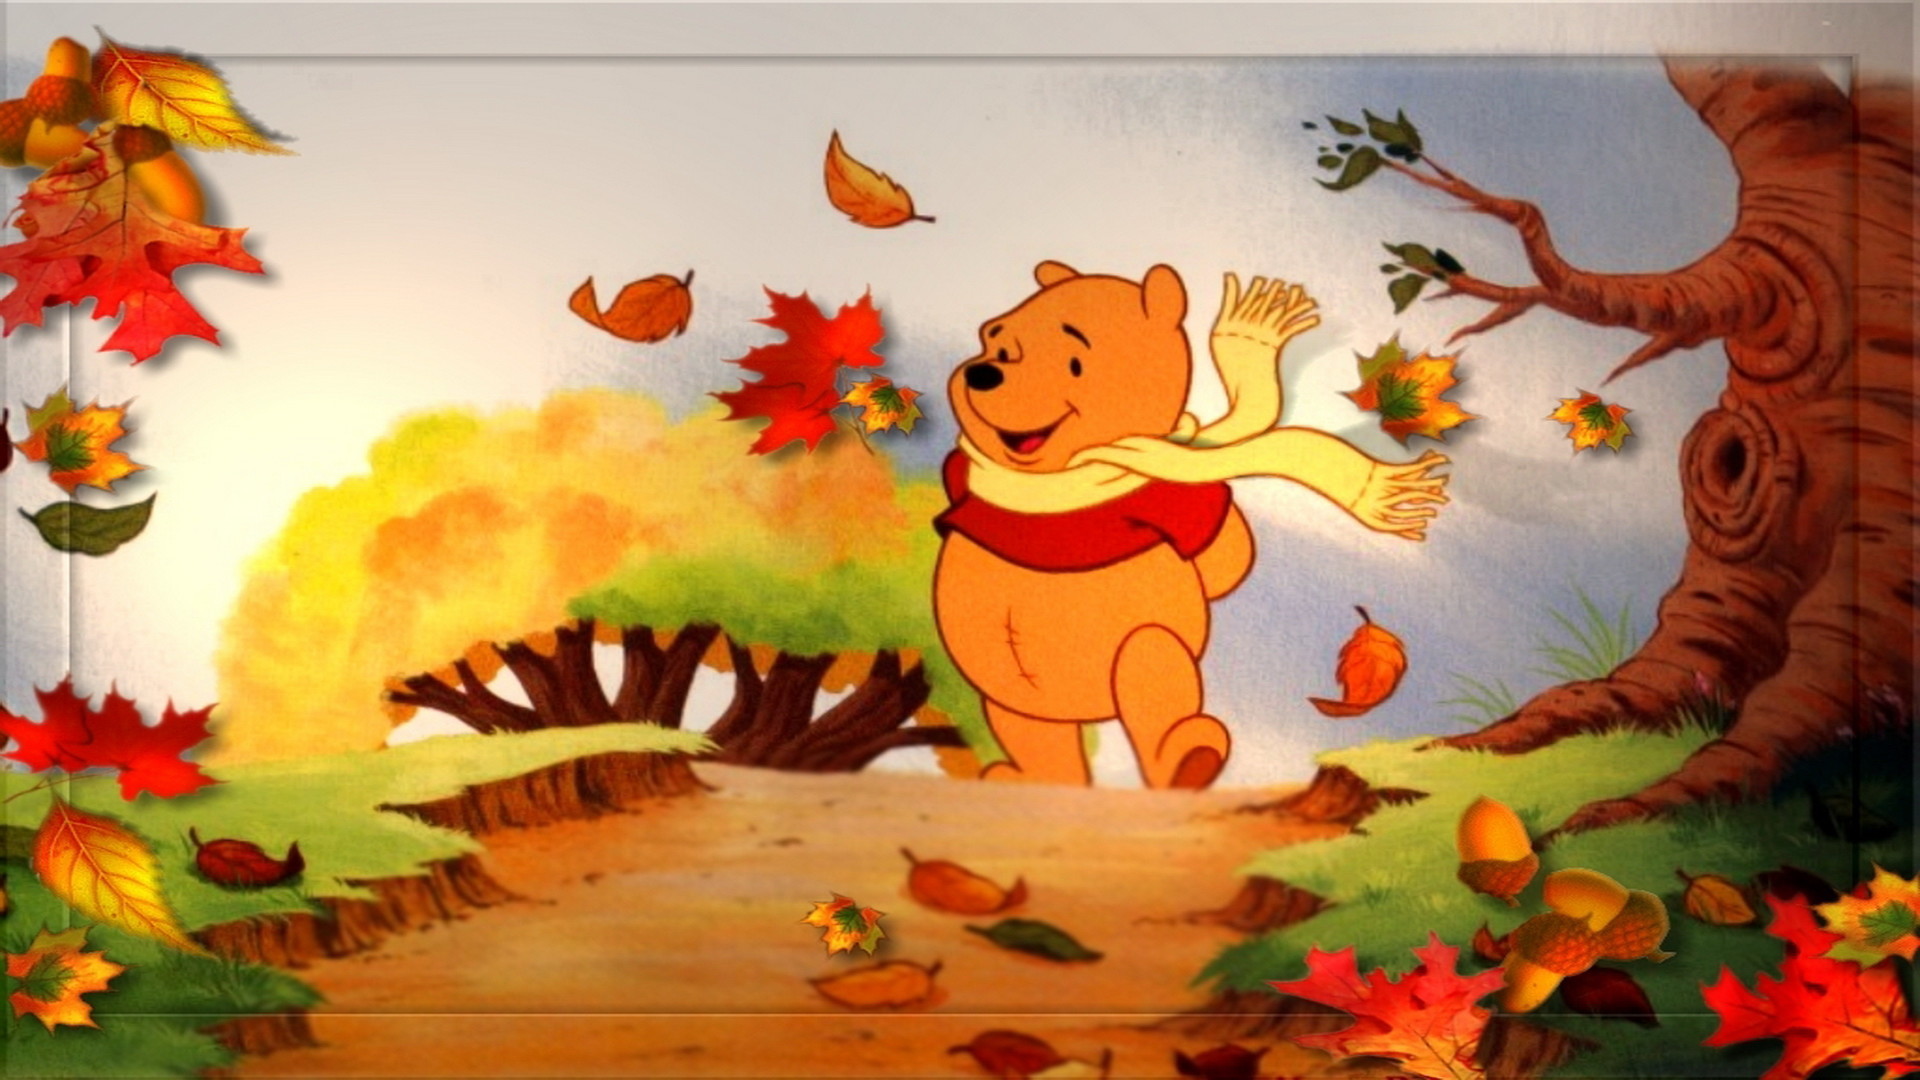 1920x1080  Disney Wallpaper, Winnie The Pooh disney 236691, HD Desktop  Wallpapers .